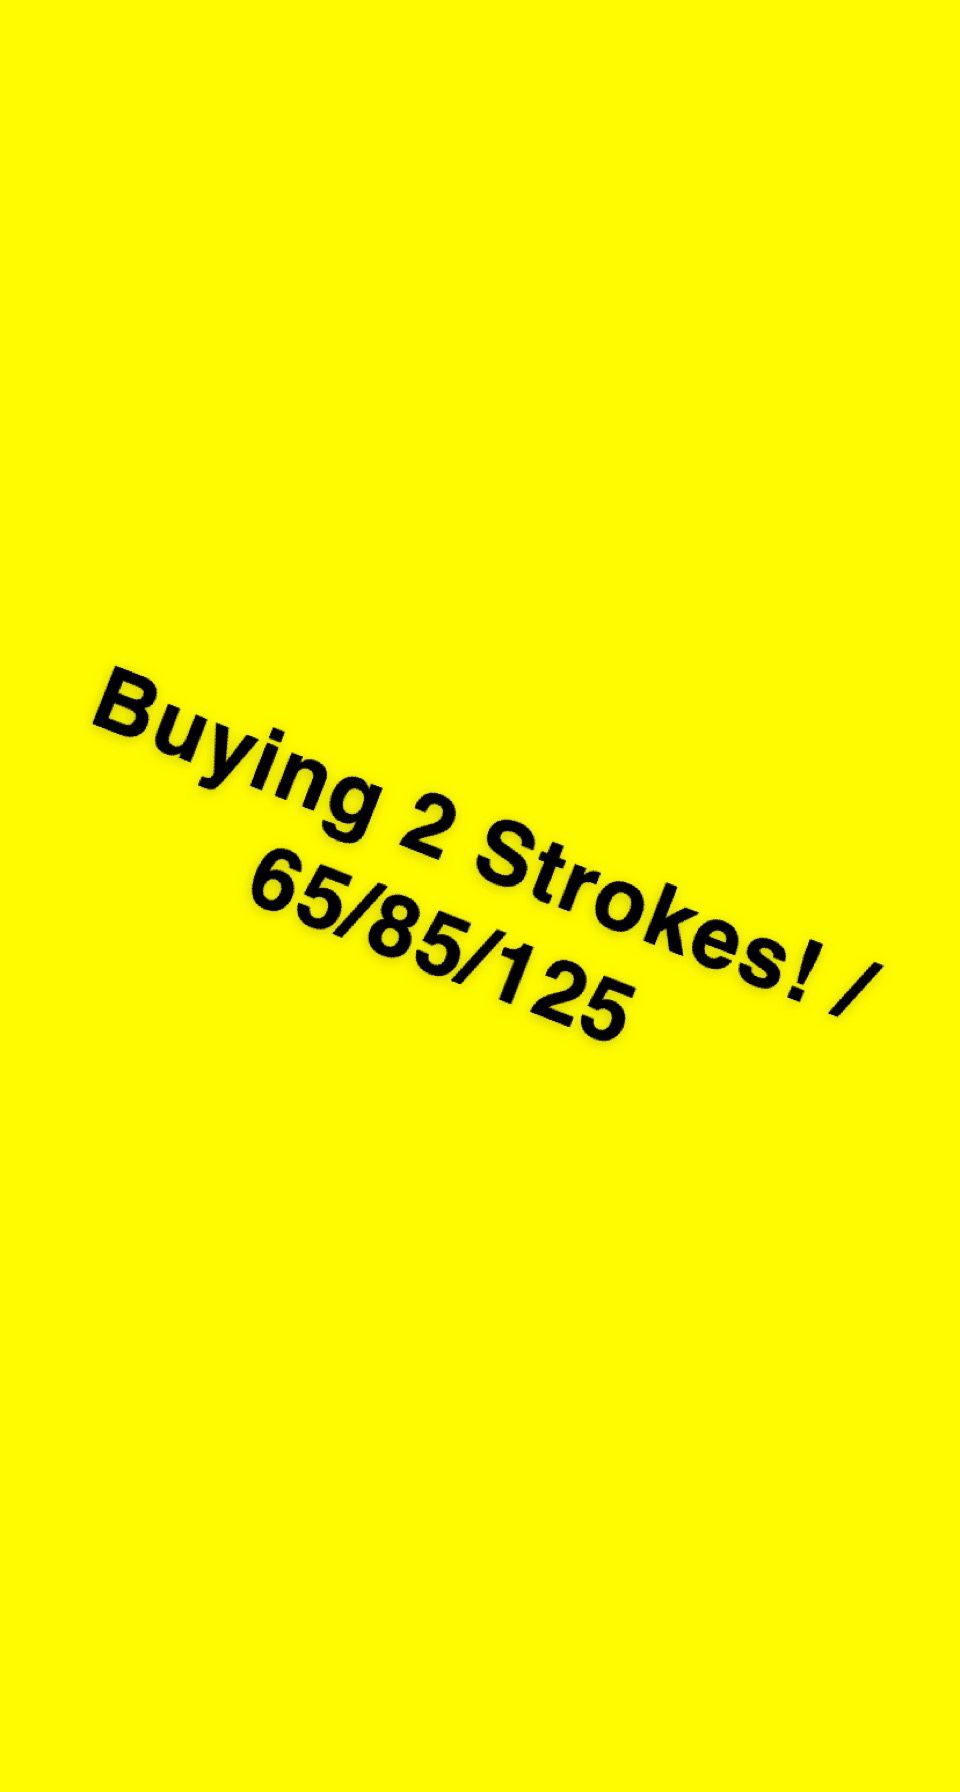 Buying 2 Strokes Dirtbikes!!